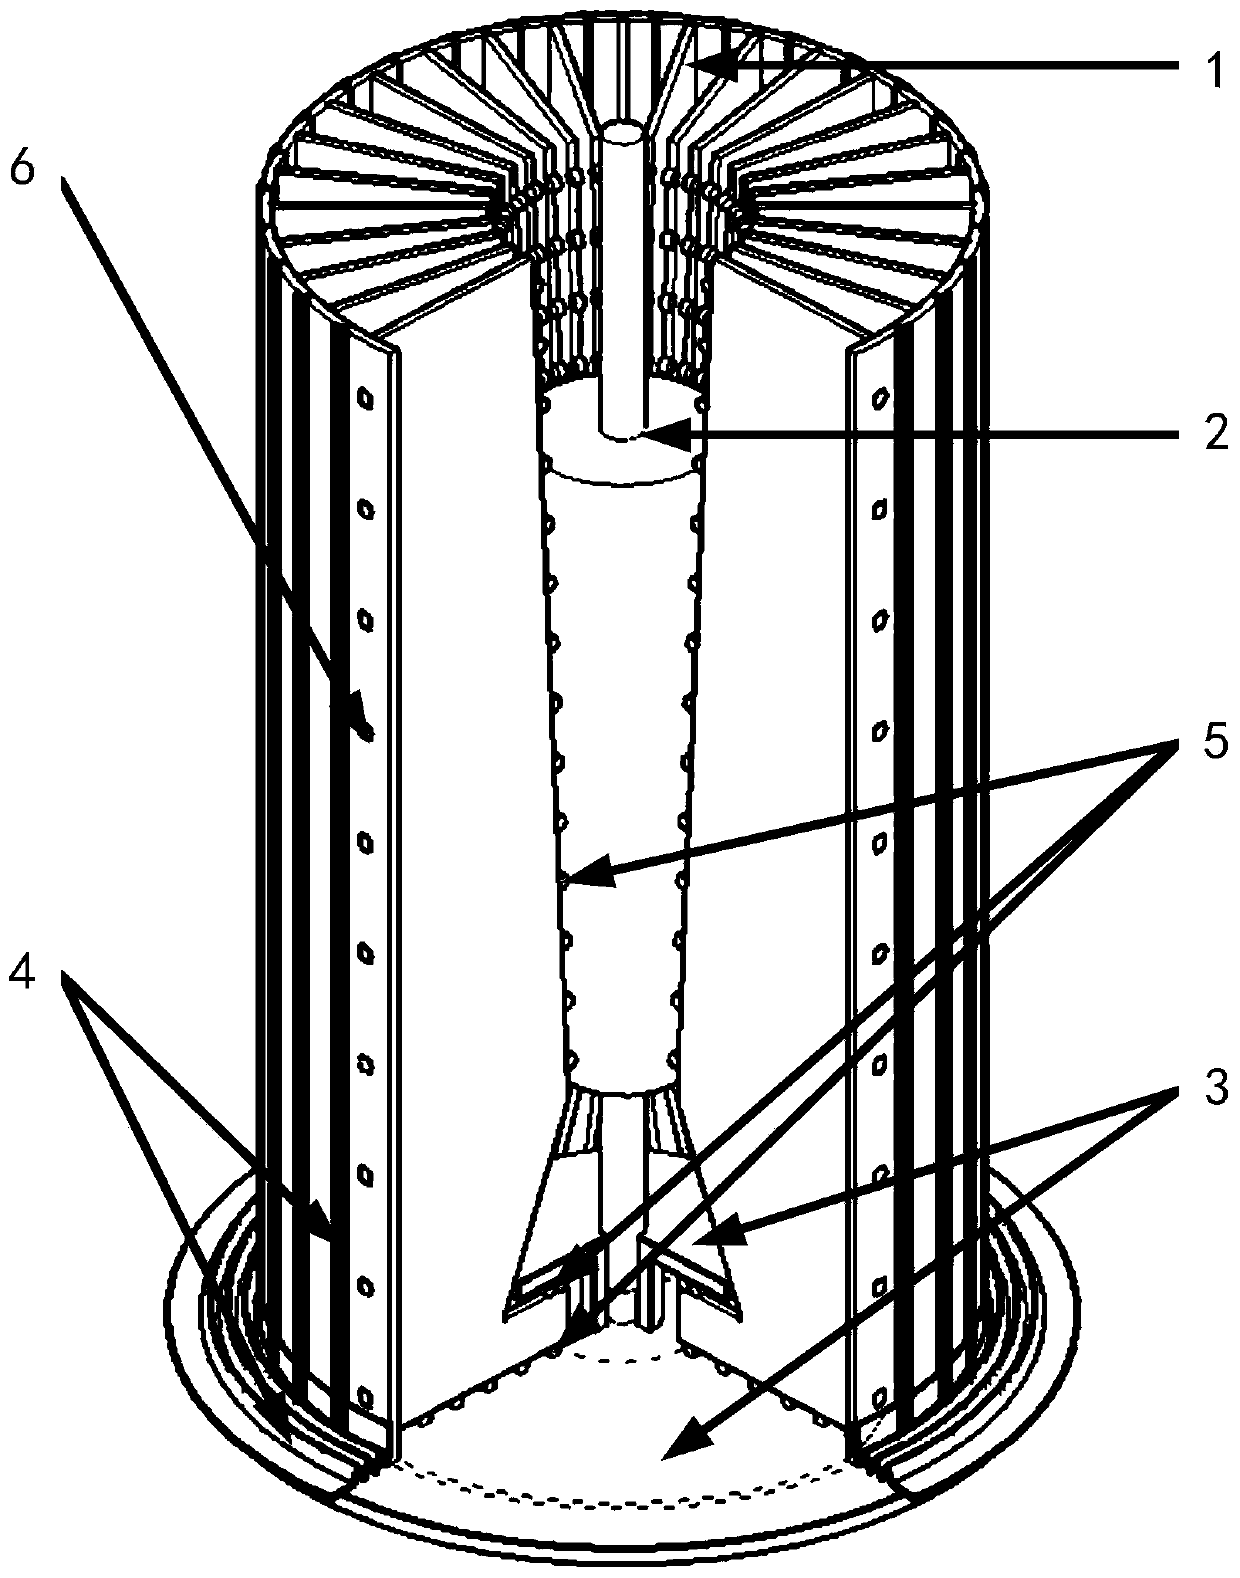 Model test device and method for cylinder side pressure test in loose medium